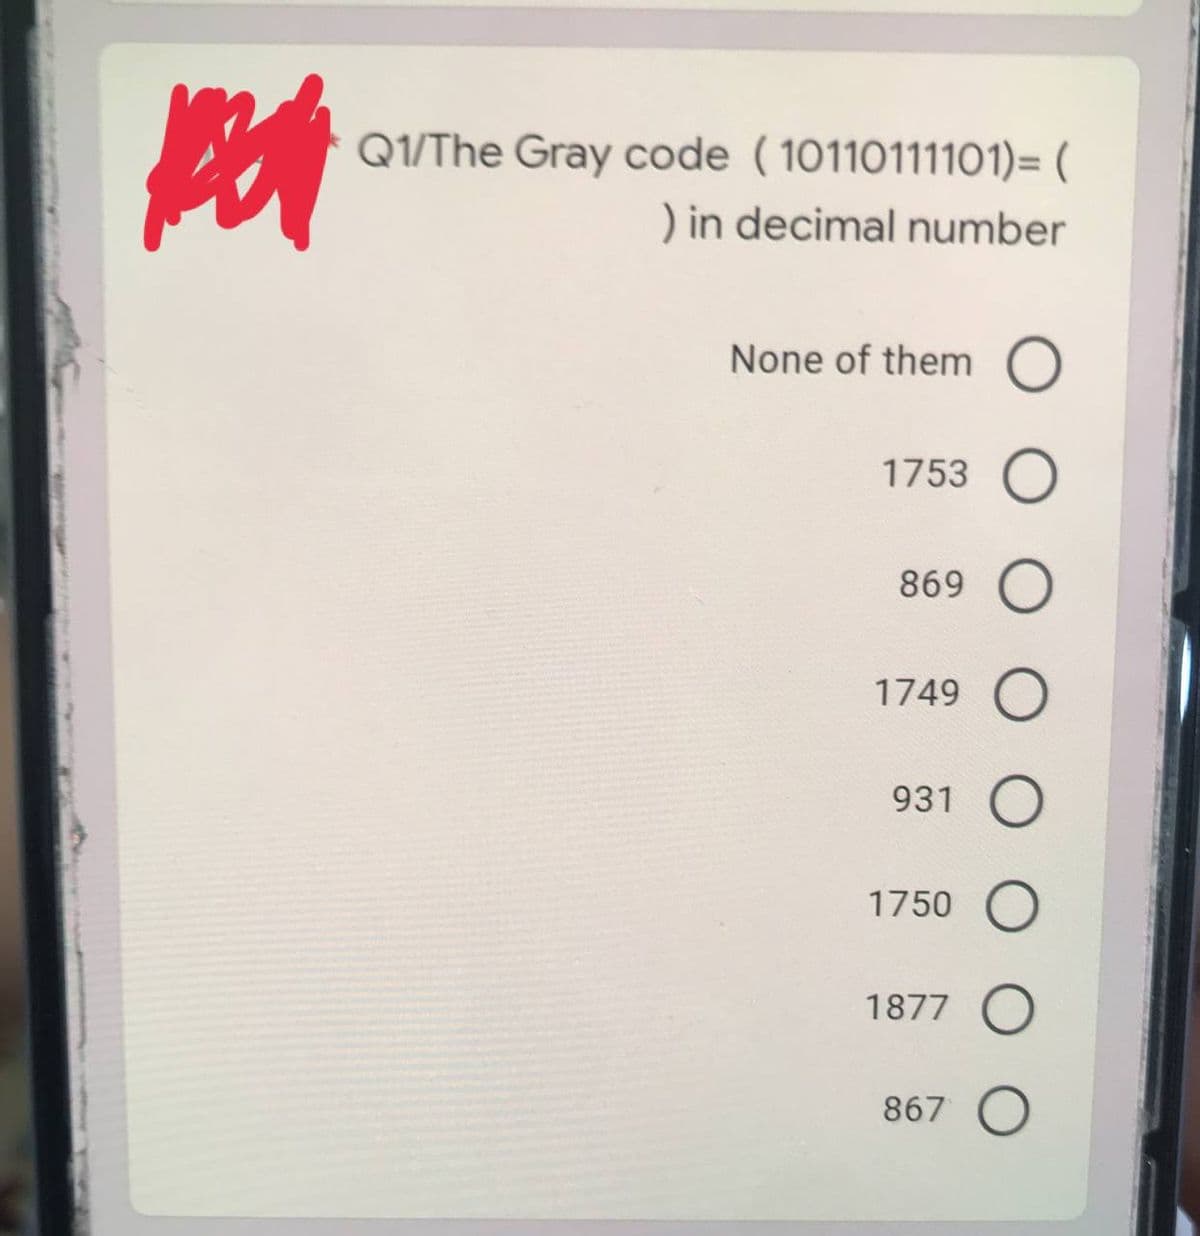 Q1/The Gray code (1011011110o1)= (
) in decimal number
None of them
1753
869 O
1749 O
931 O
1750
1877 O
867 O
